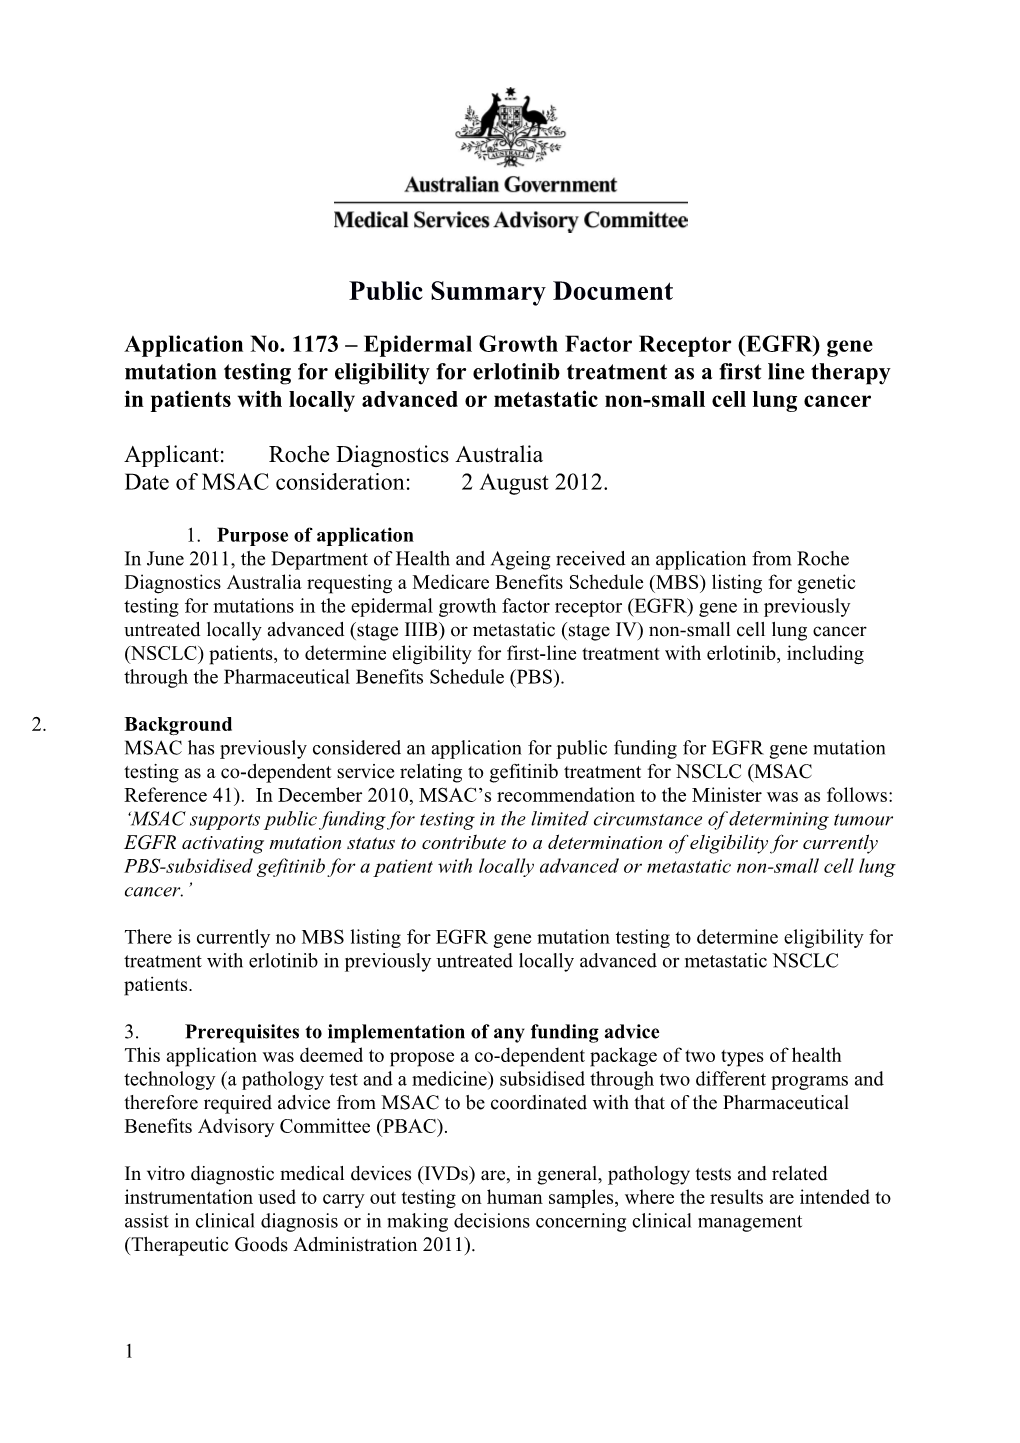 Public Summary Document s2